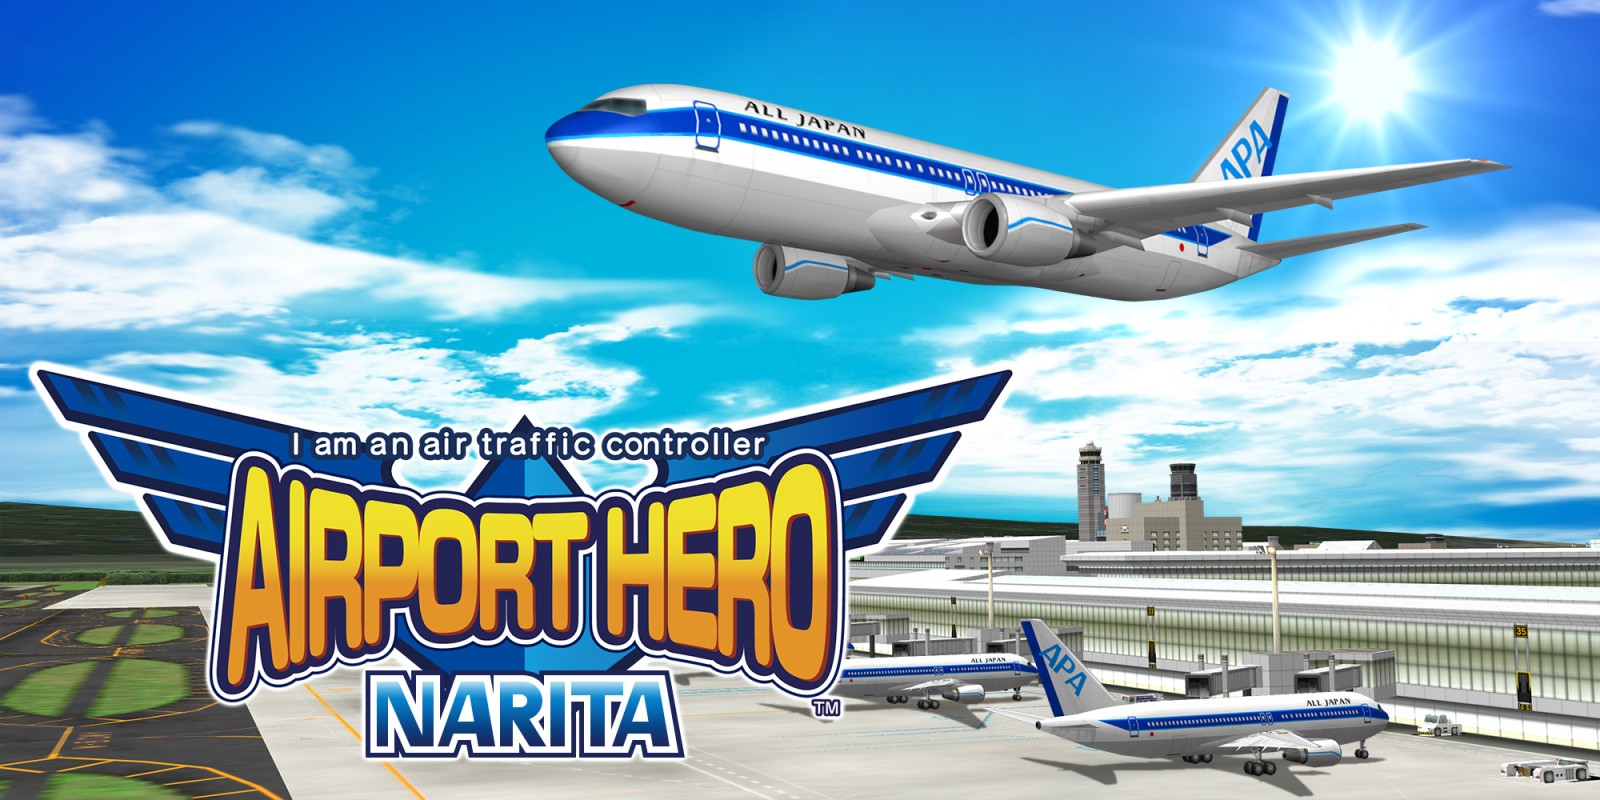 I am an air traffic controller AIRPORT HERO NARITA